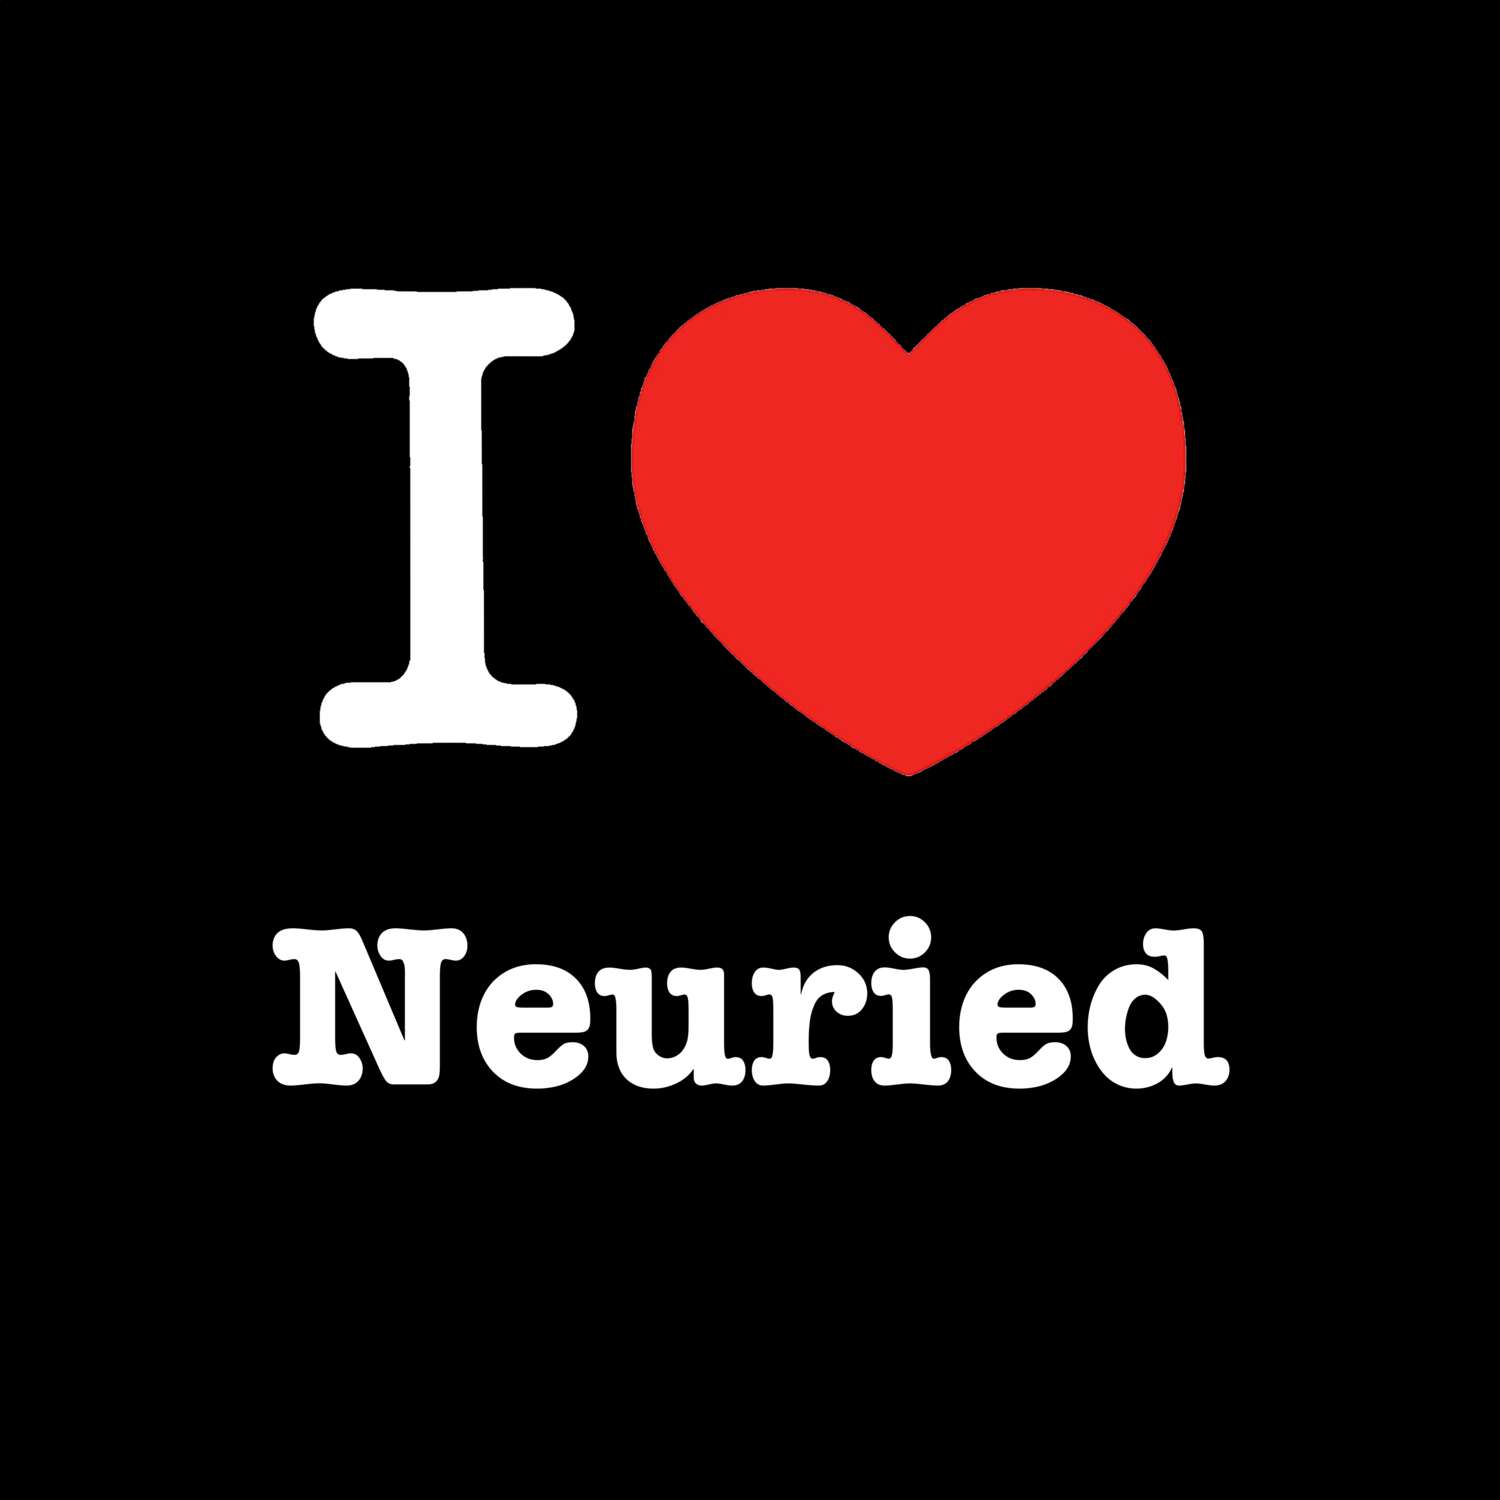 Neuried T-Shirt »I love«